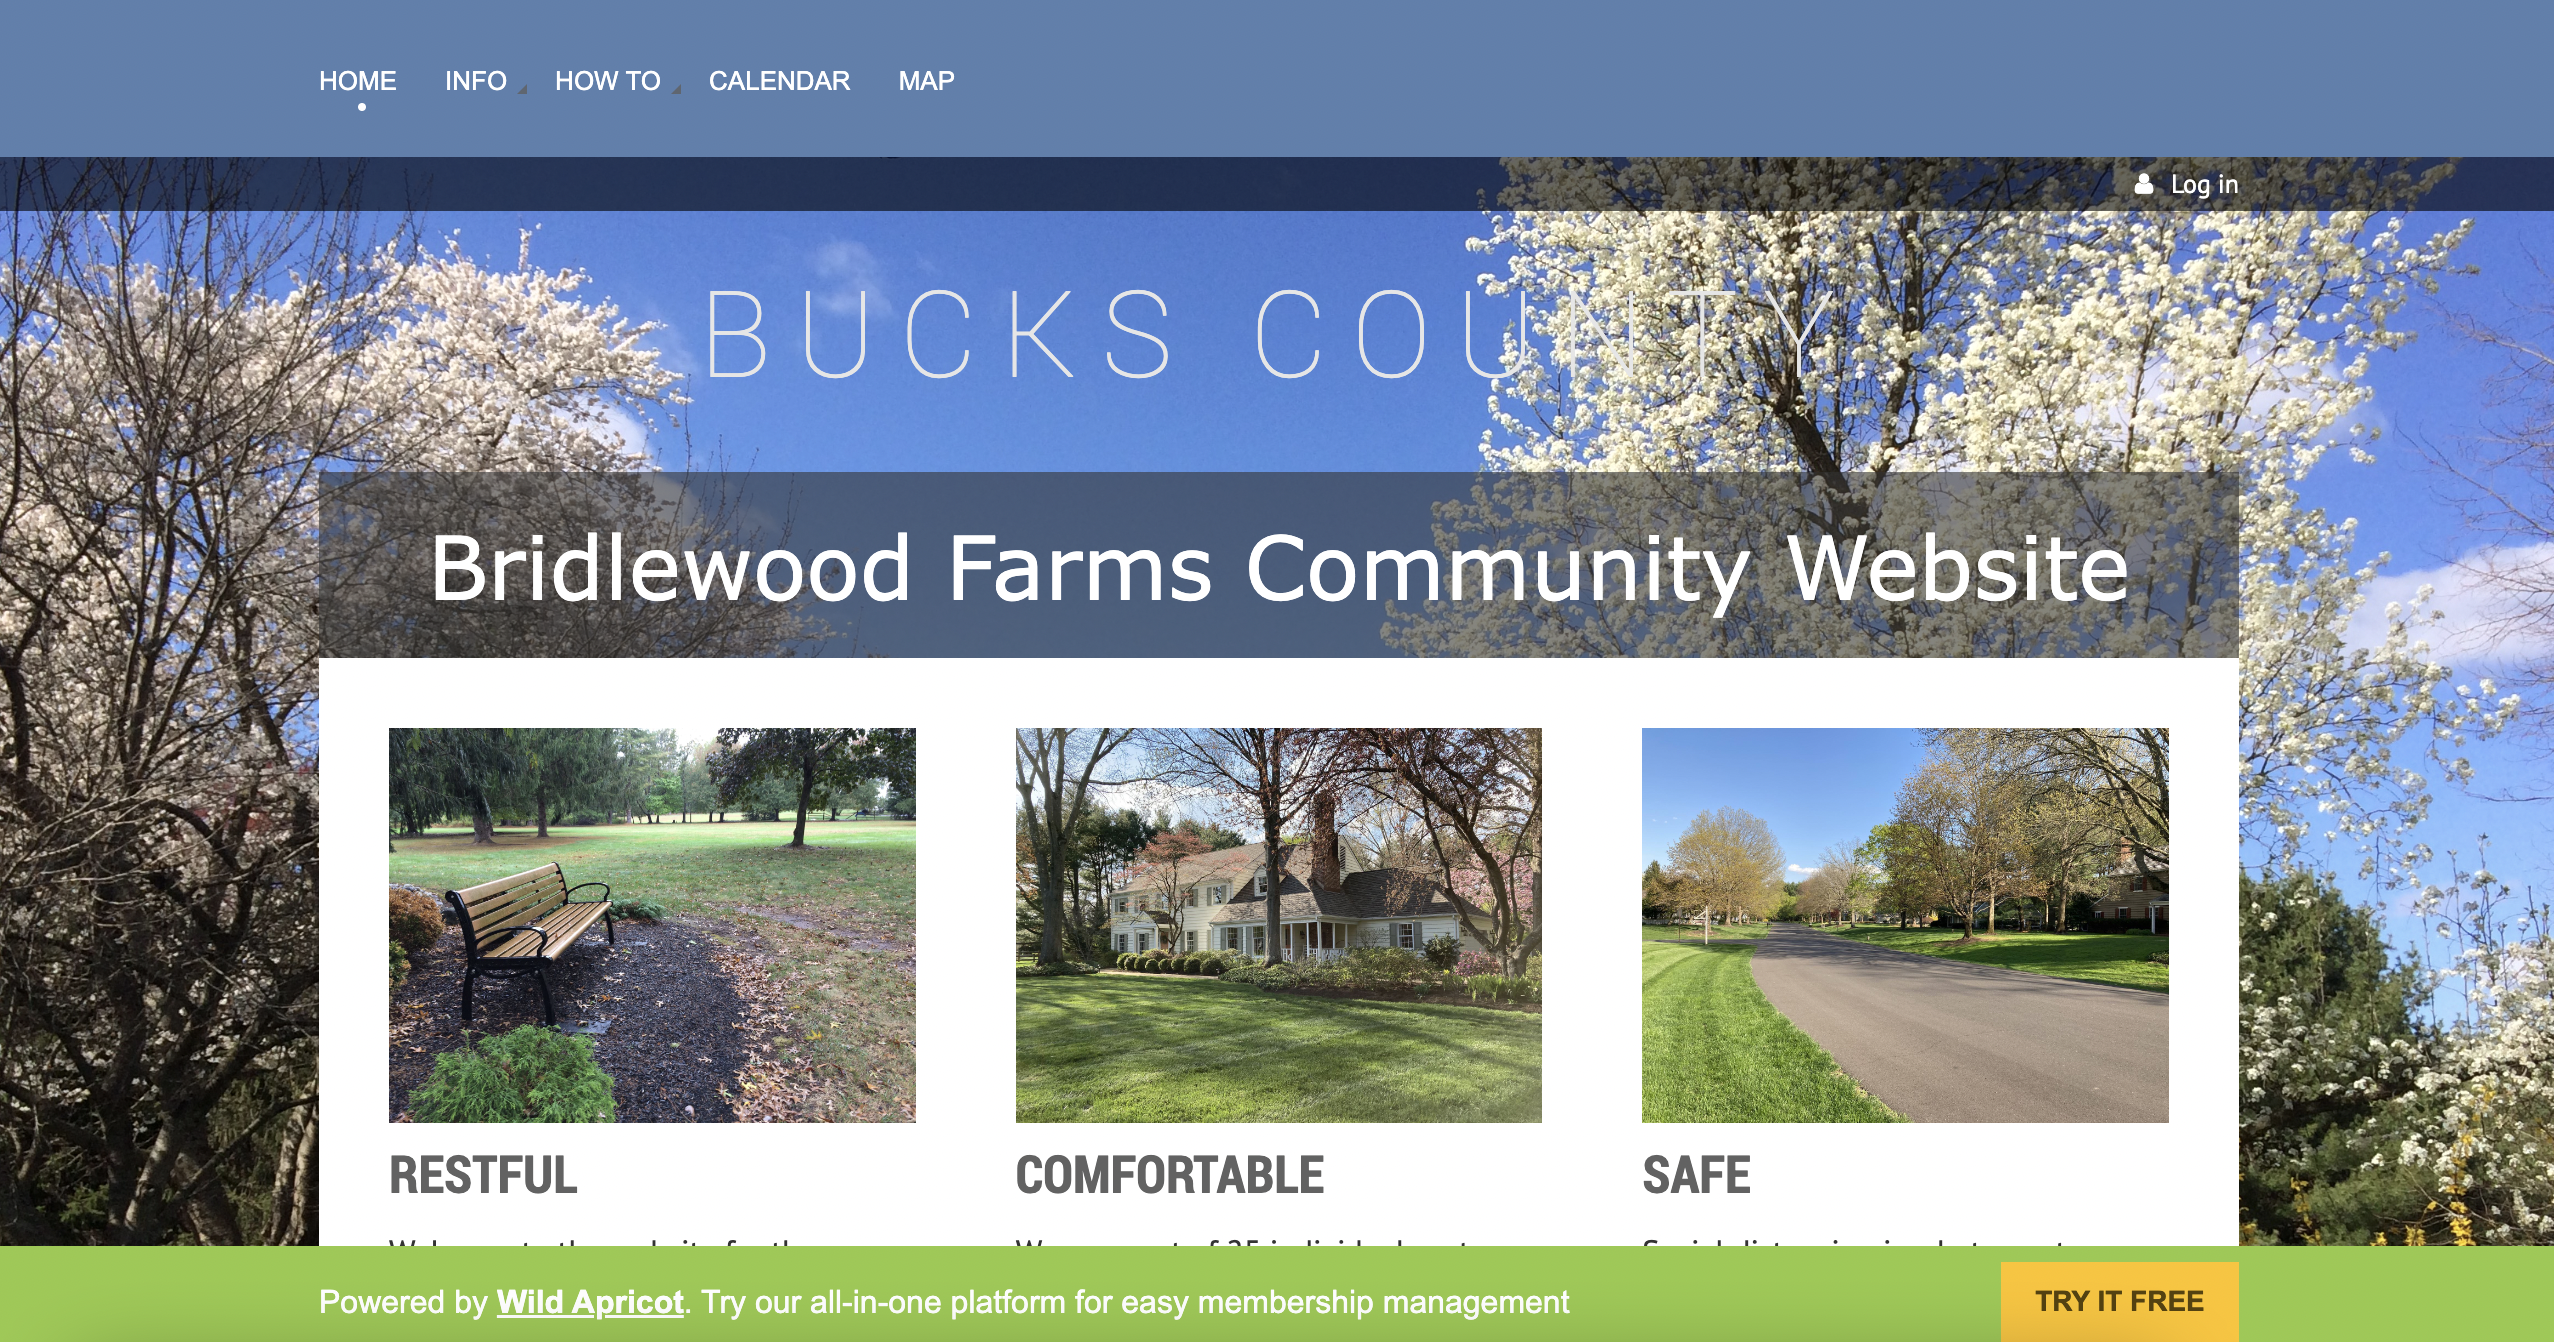 HOA Websites example - Bridlewood